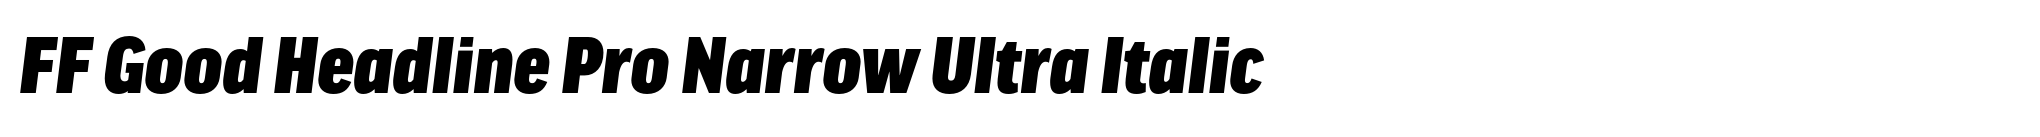 FF Good Headline Pro Narrow Ultra Italic image